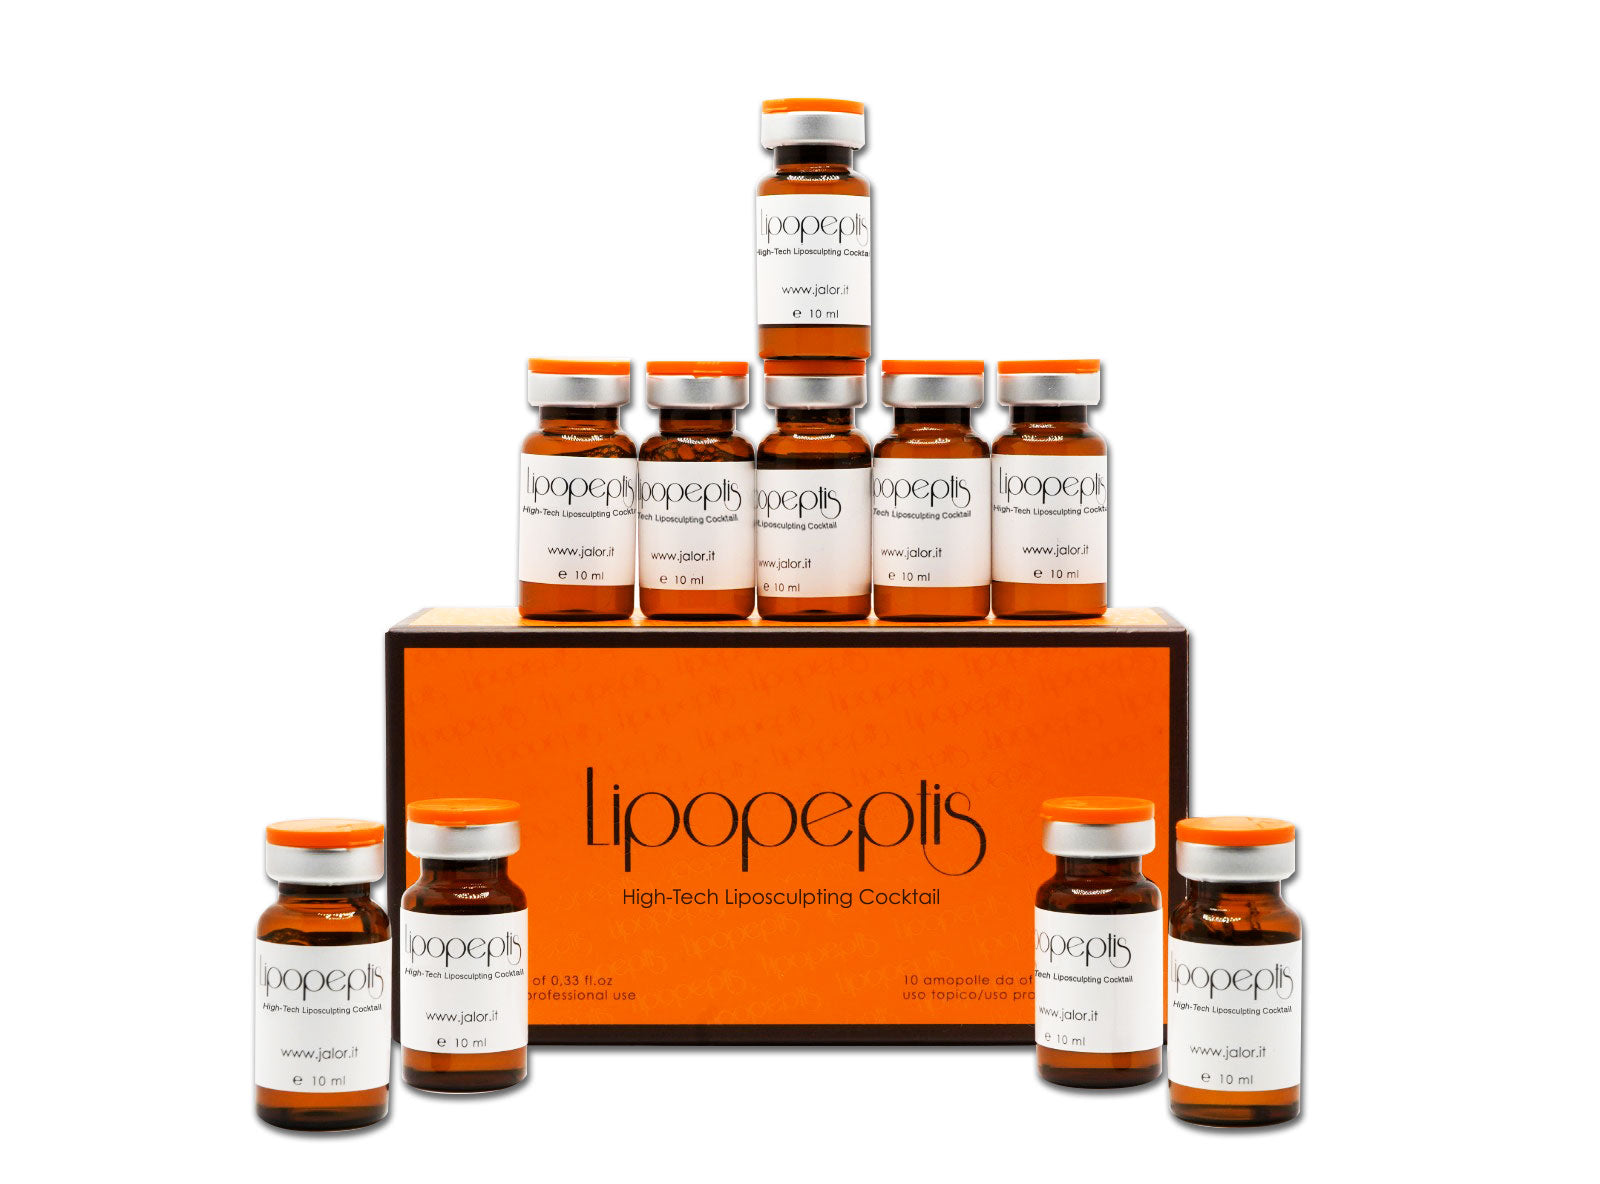 LIPOPEPTIS – High-Tech-Lipolyse-Cocktail